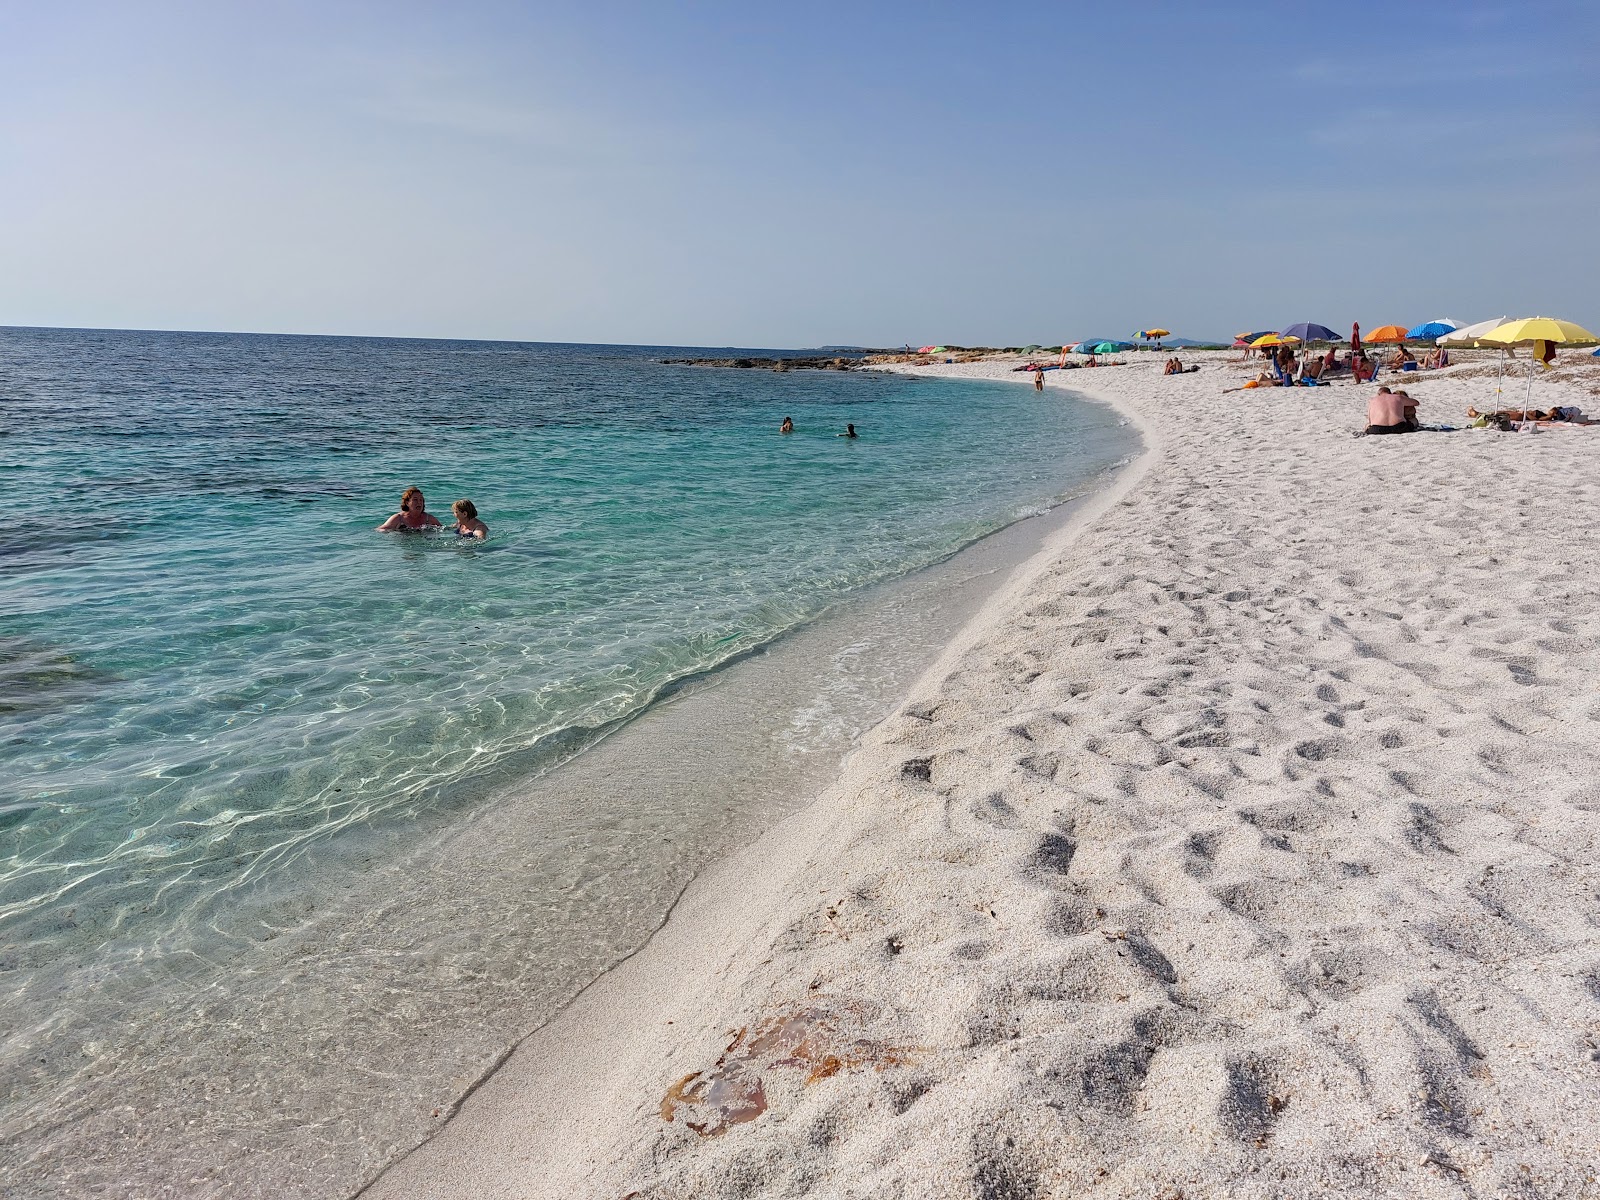 Foto av Spiaggia Corrighias med ljus sand yta